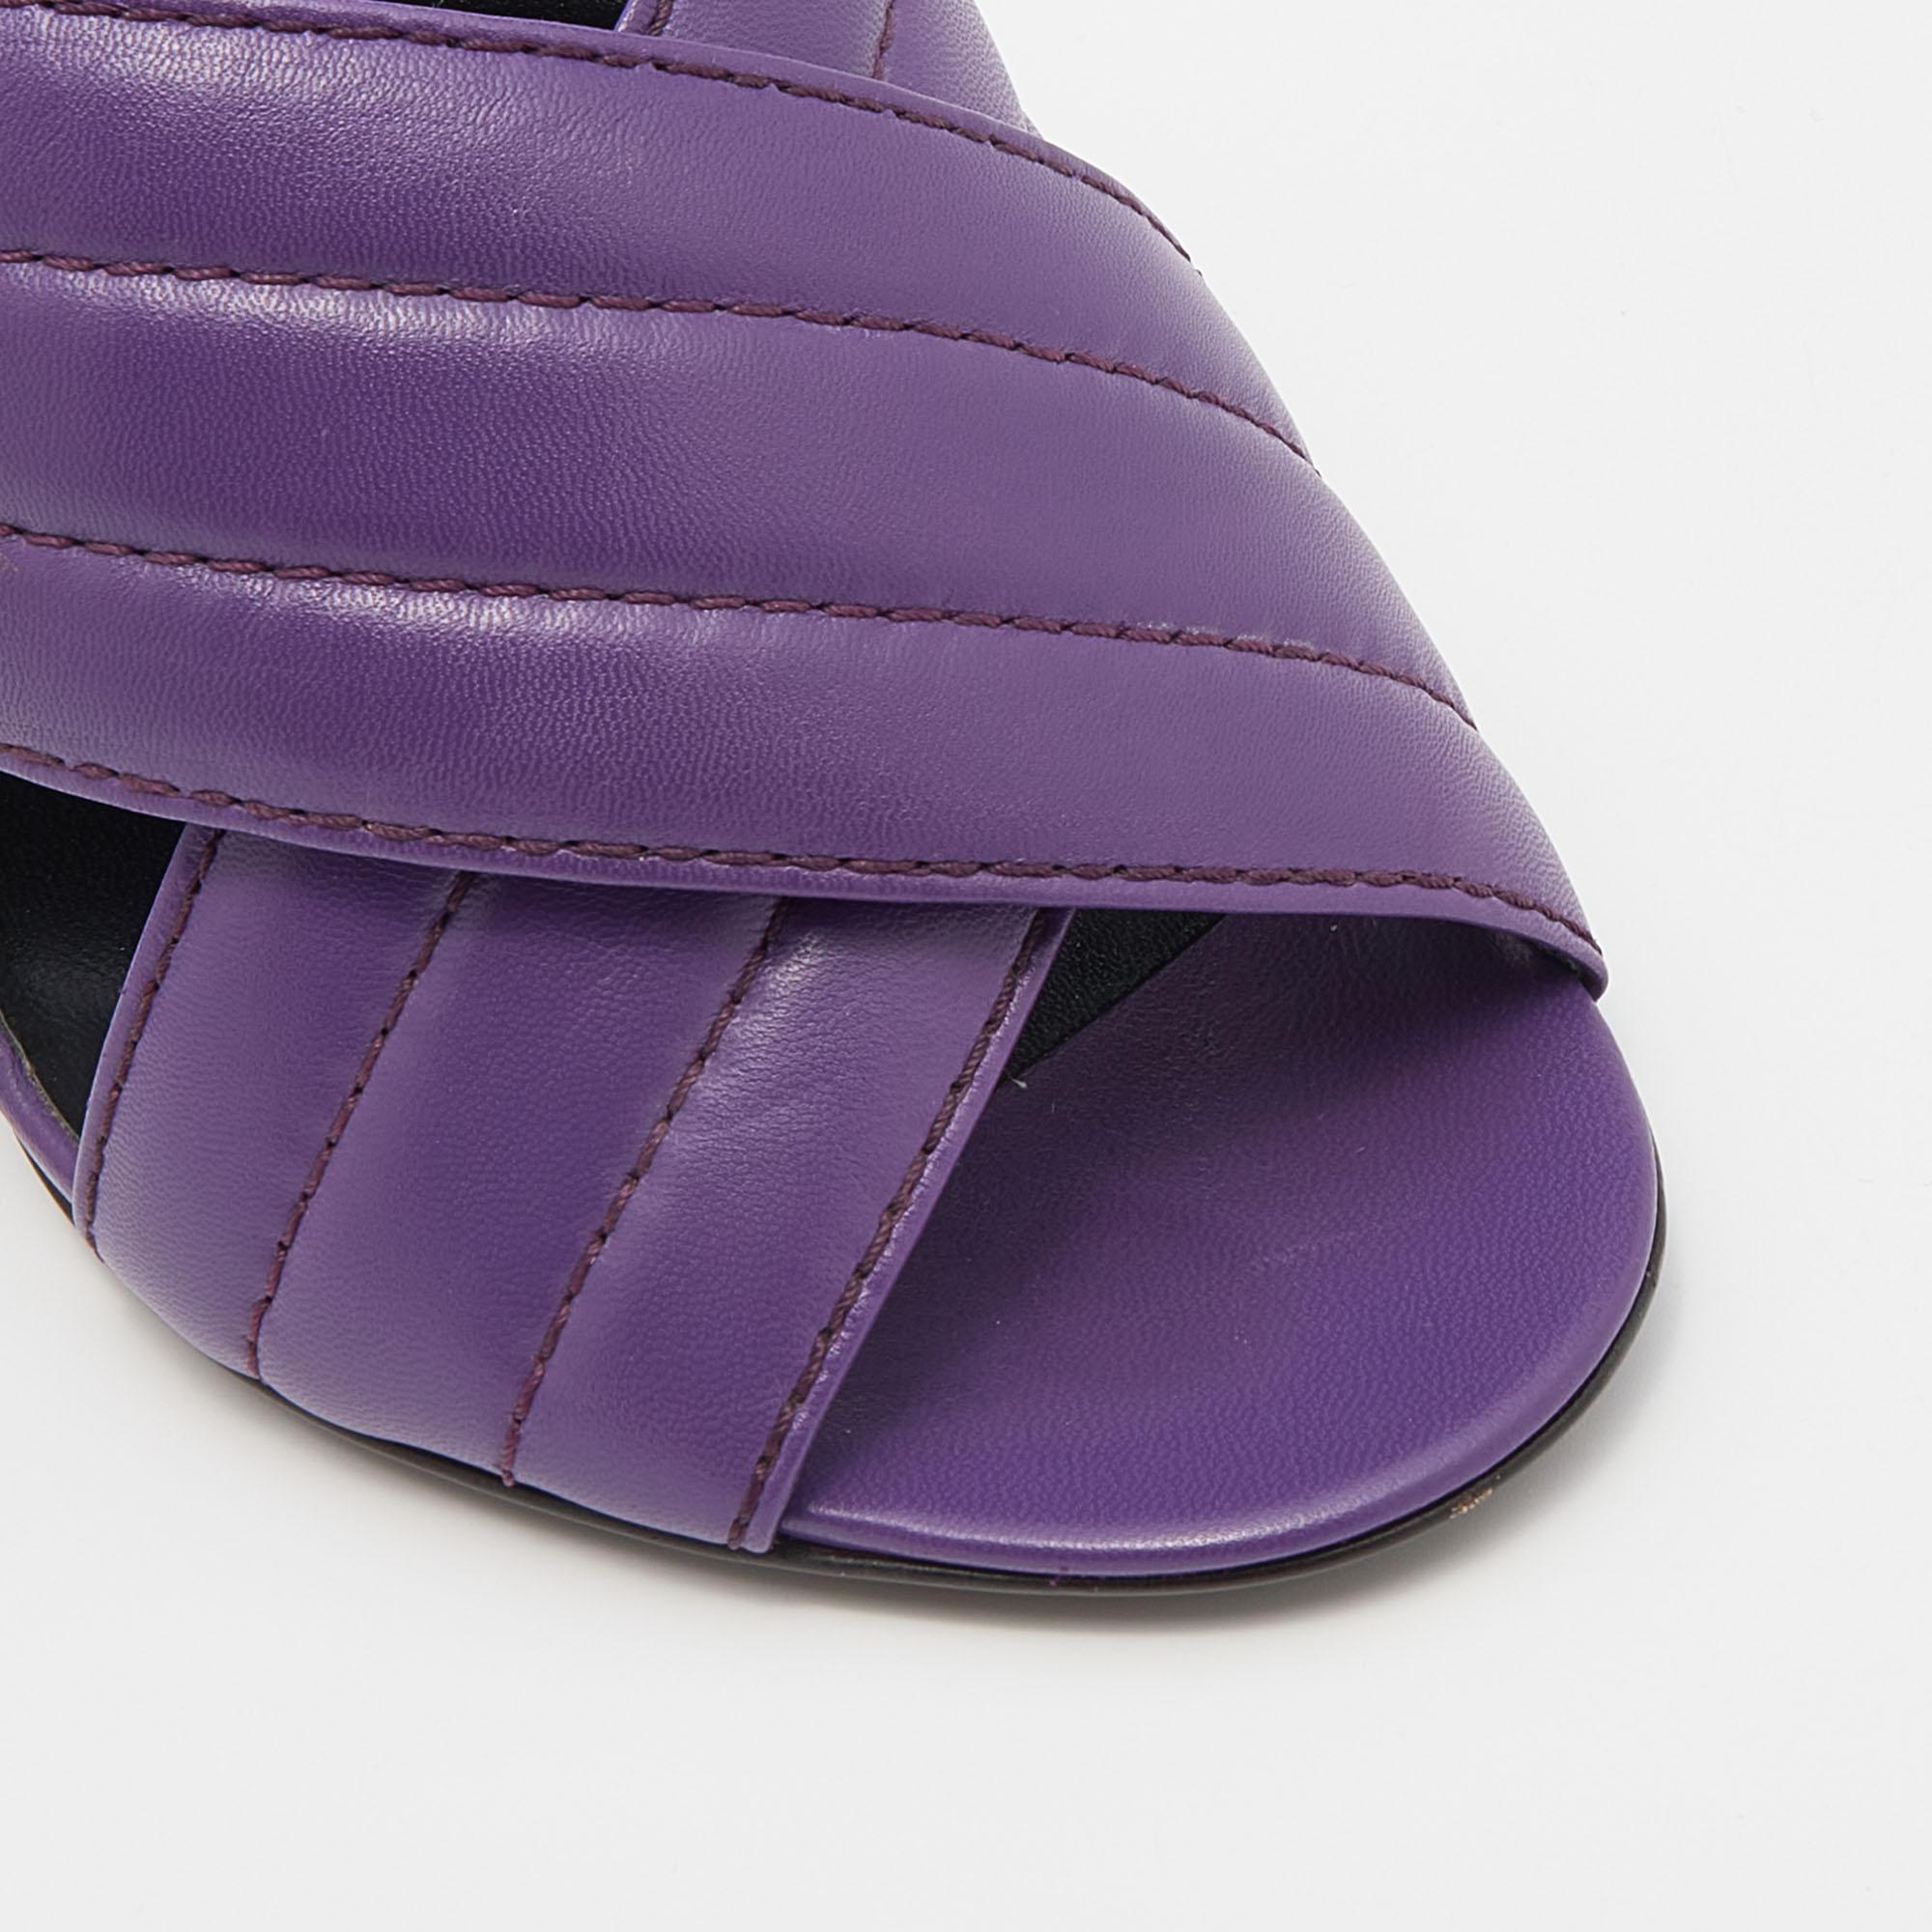 Gucci Purple Leather Crisscross Sandals Size 39 1